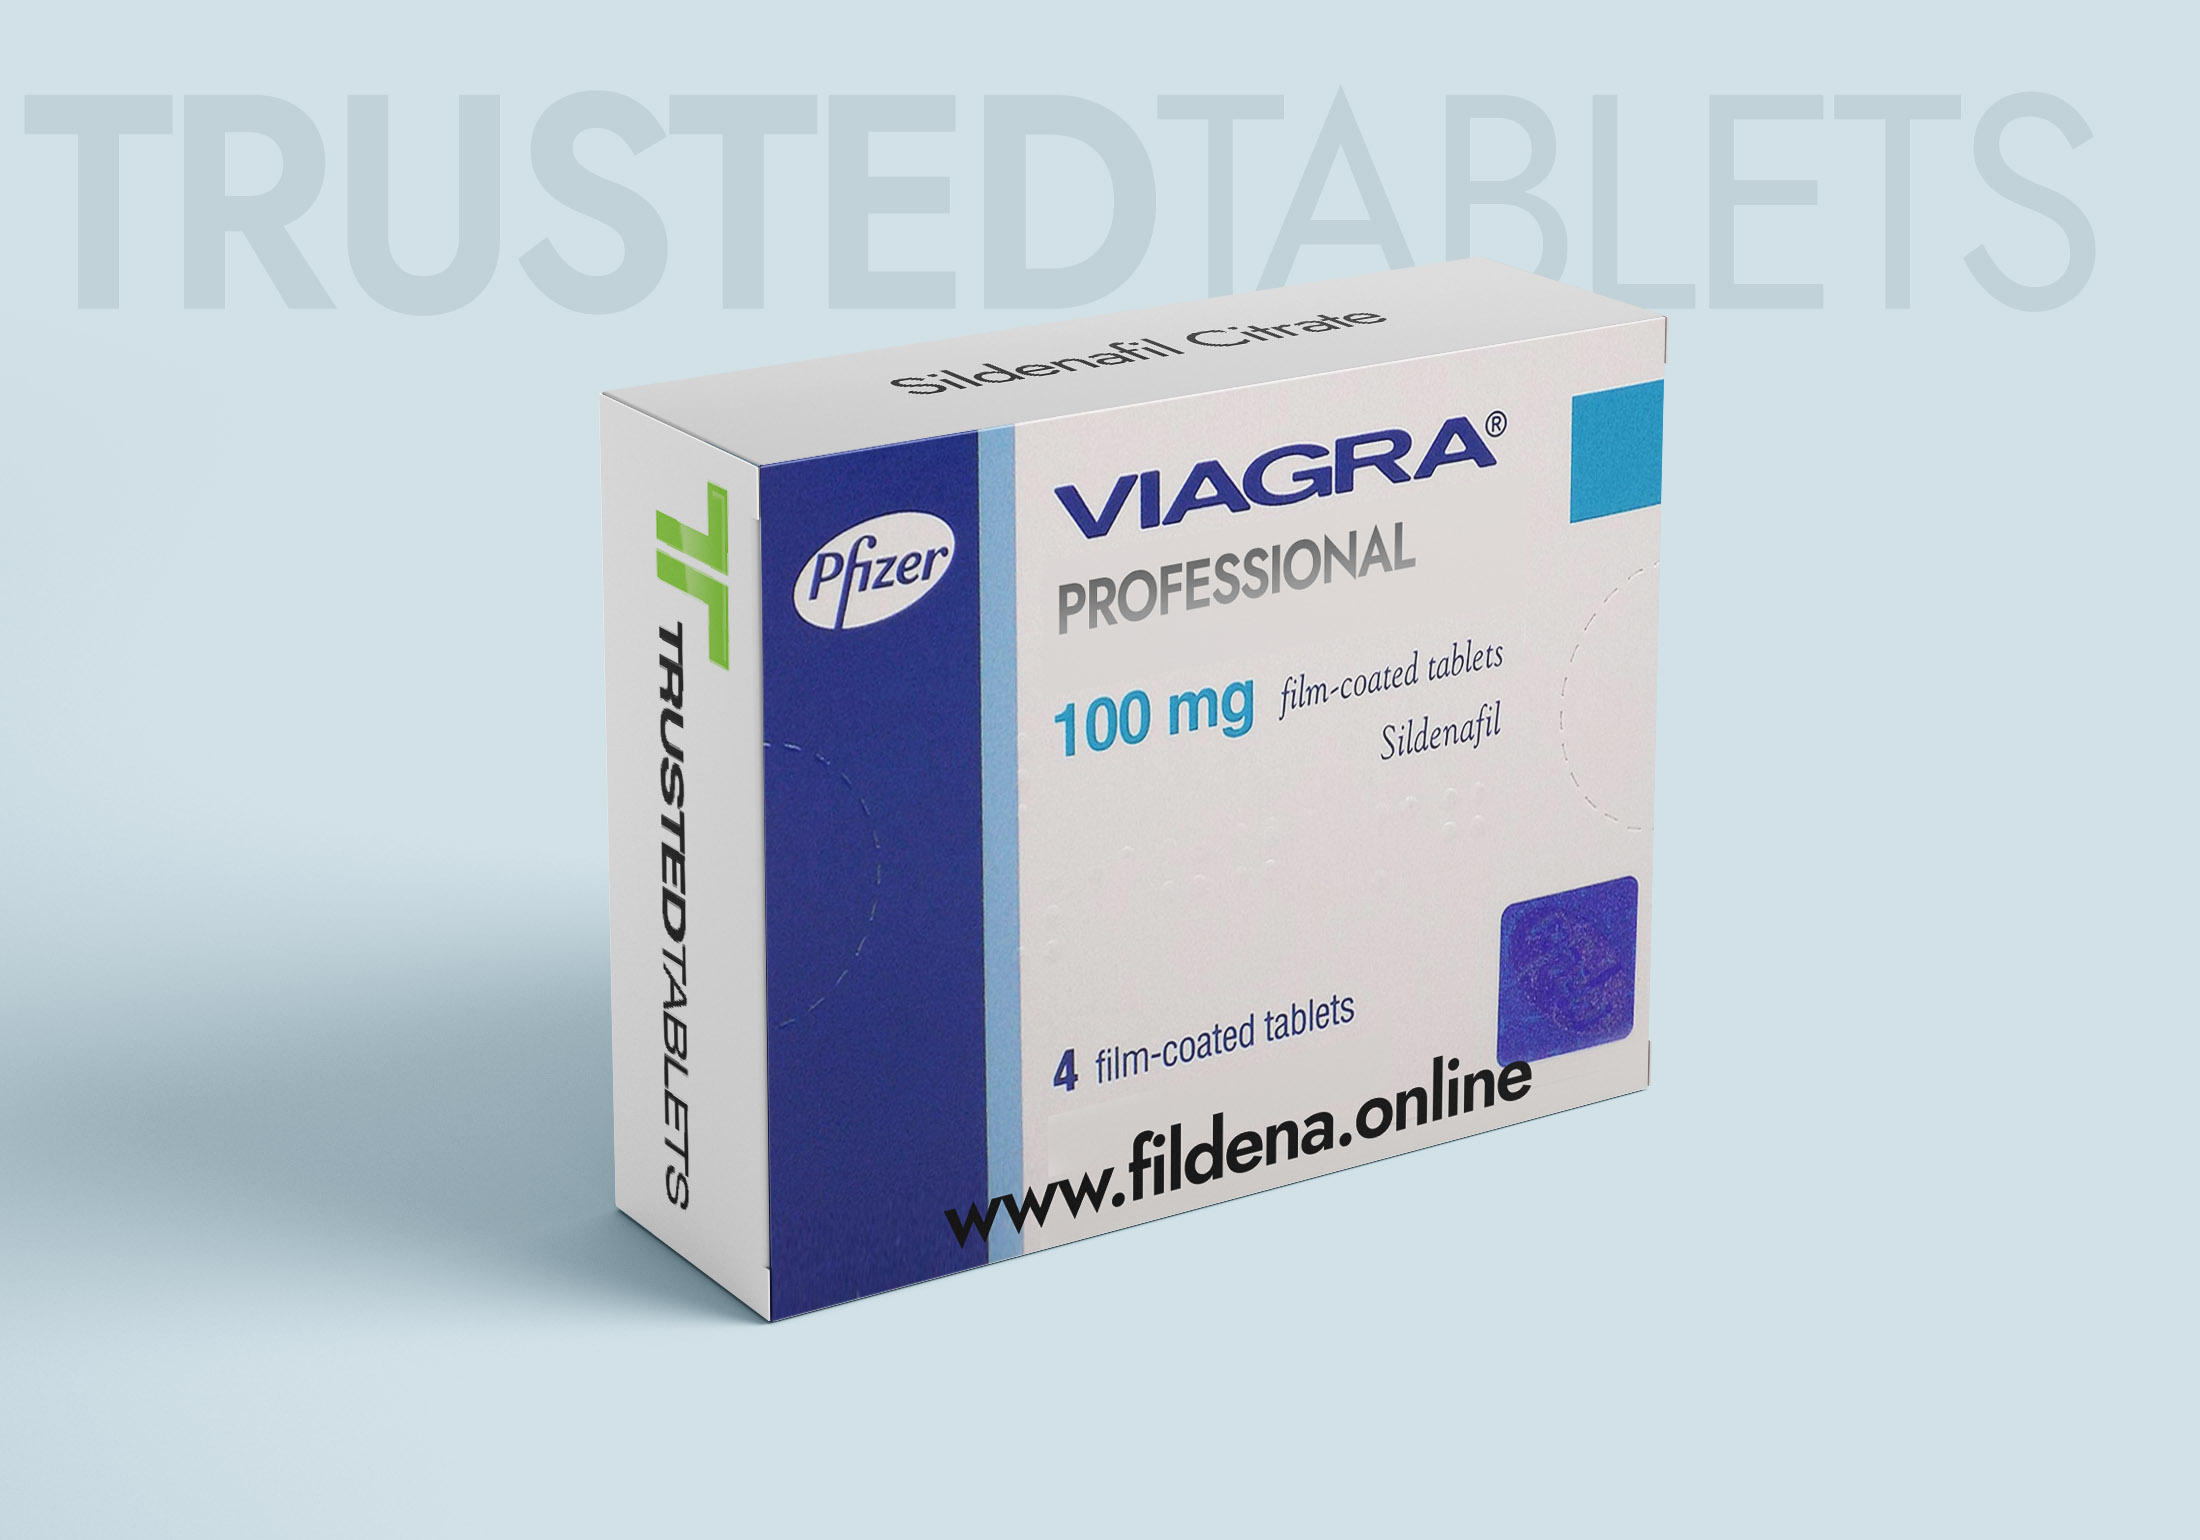 Viagra Professional TrustedTablets